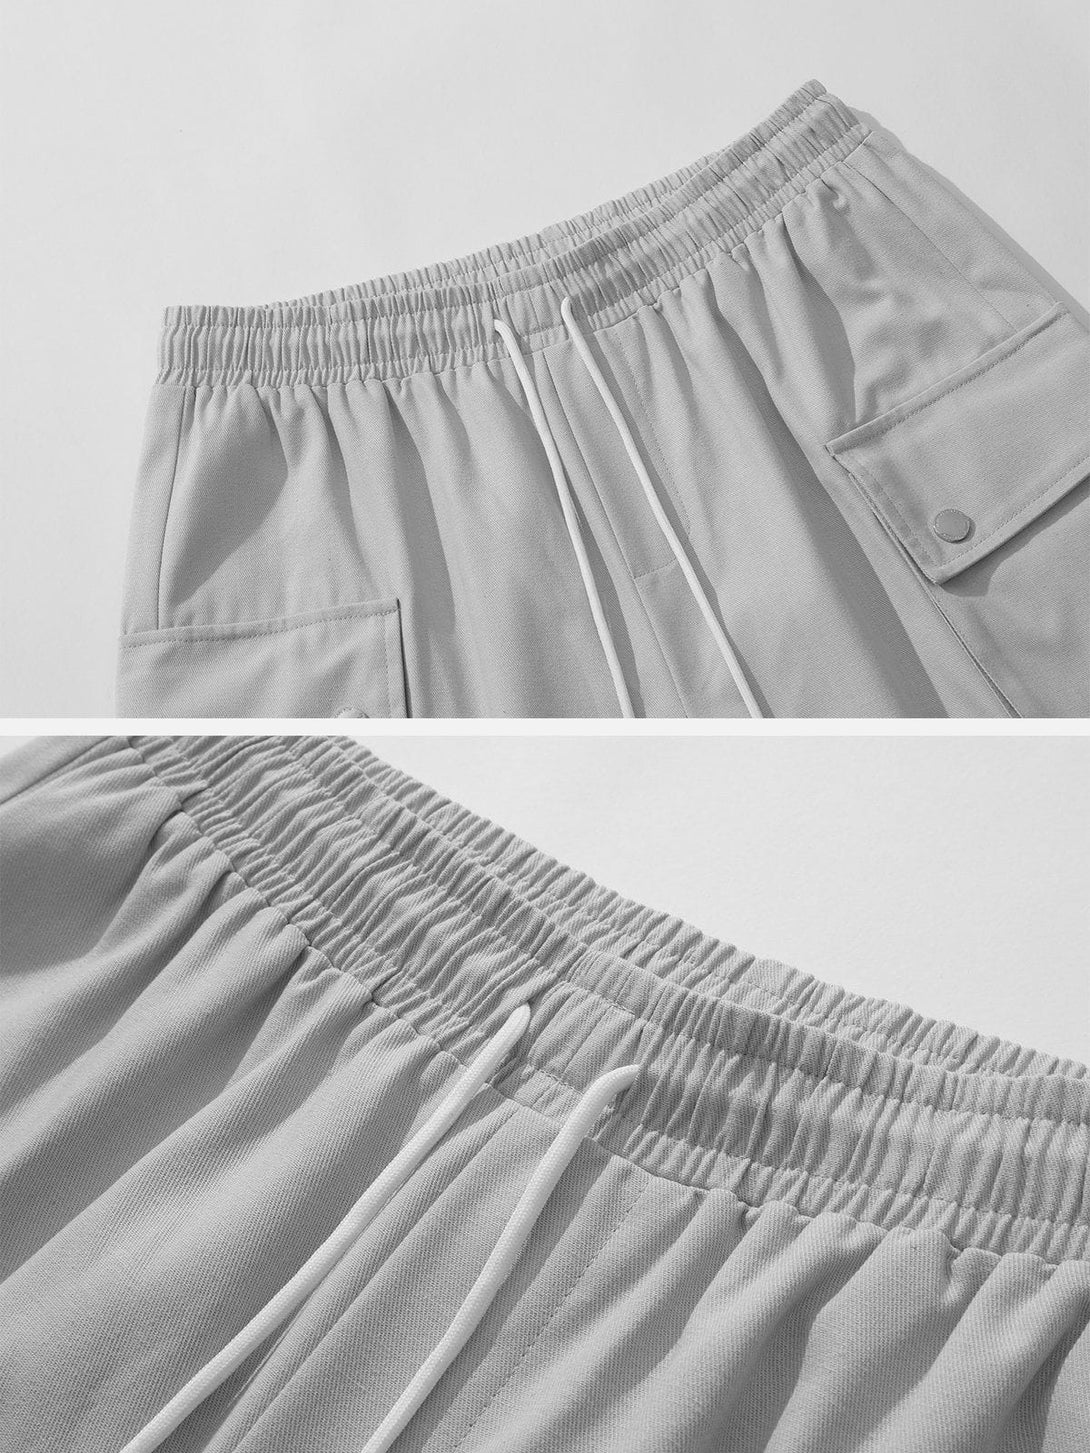 Majesda® - Multi-Pocket Shorts outfit ideas streetwear fashion